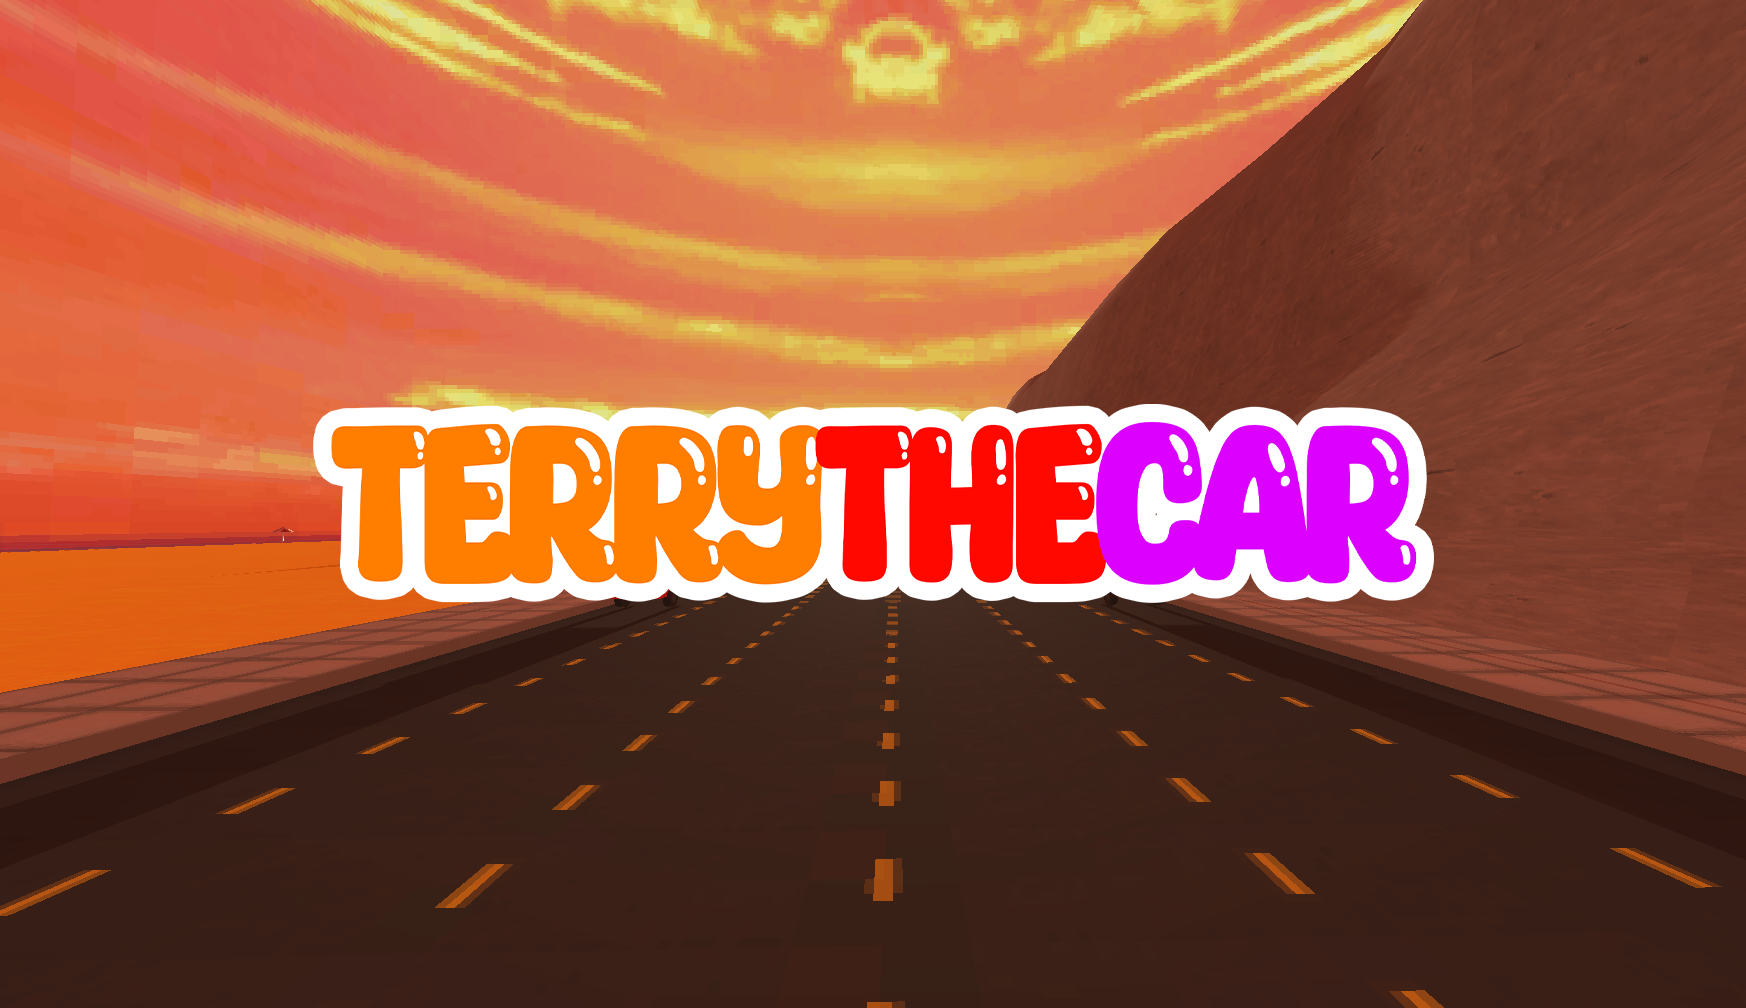 Terry the Car